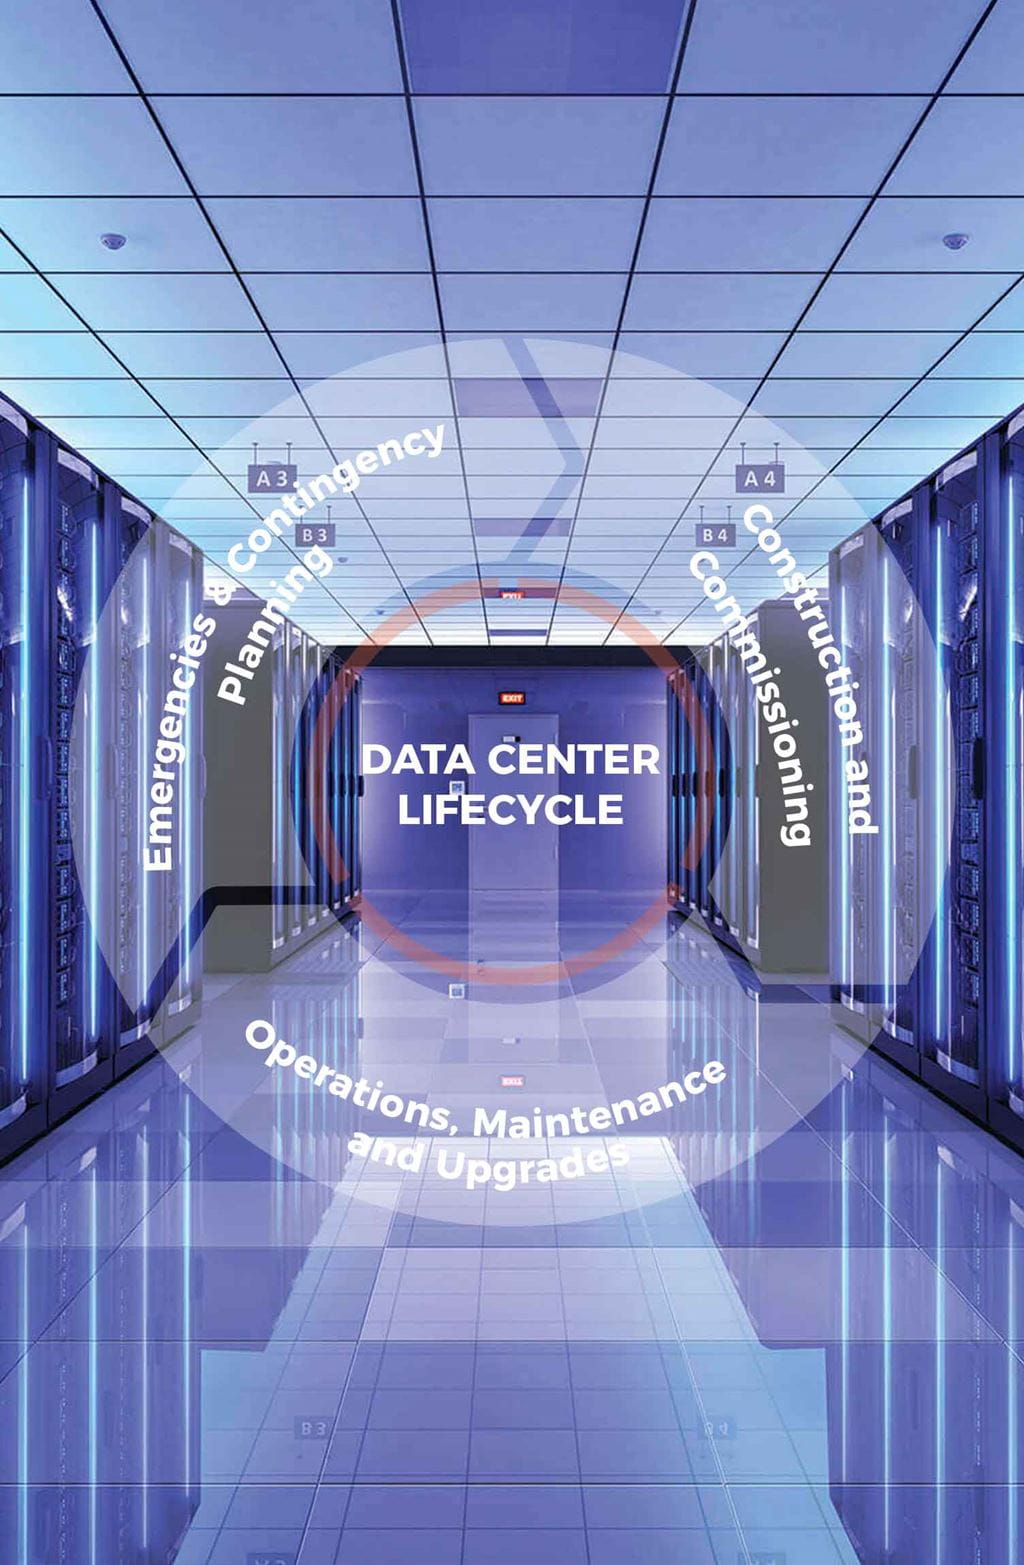 Data centers service